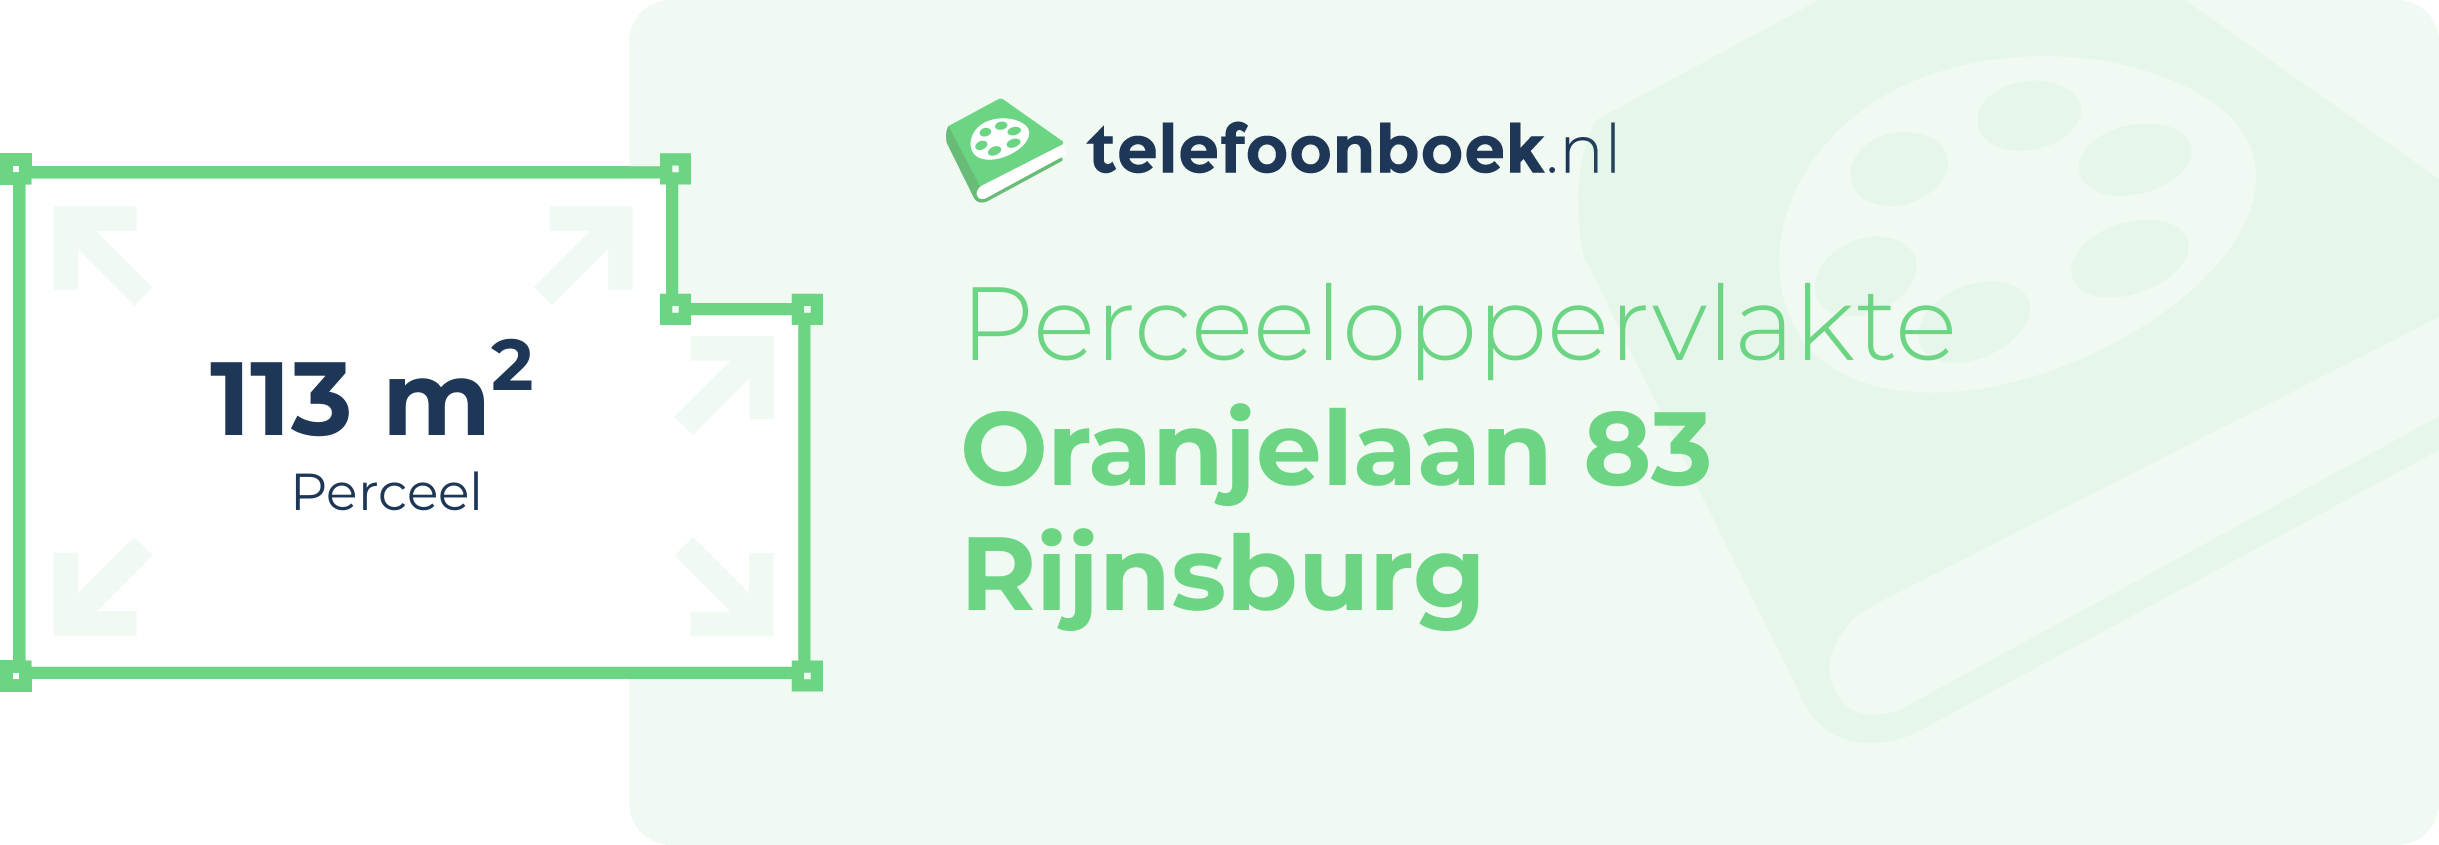 Perceeloppervlakte Oranjelaan 83 Rijnsburg